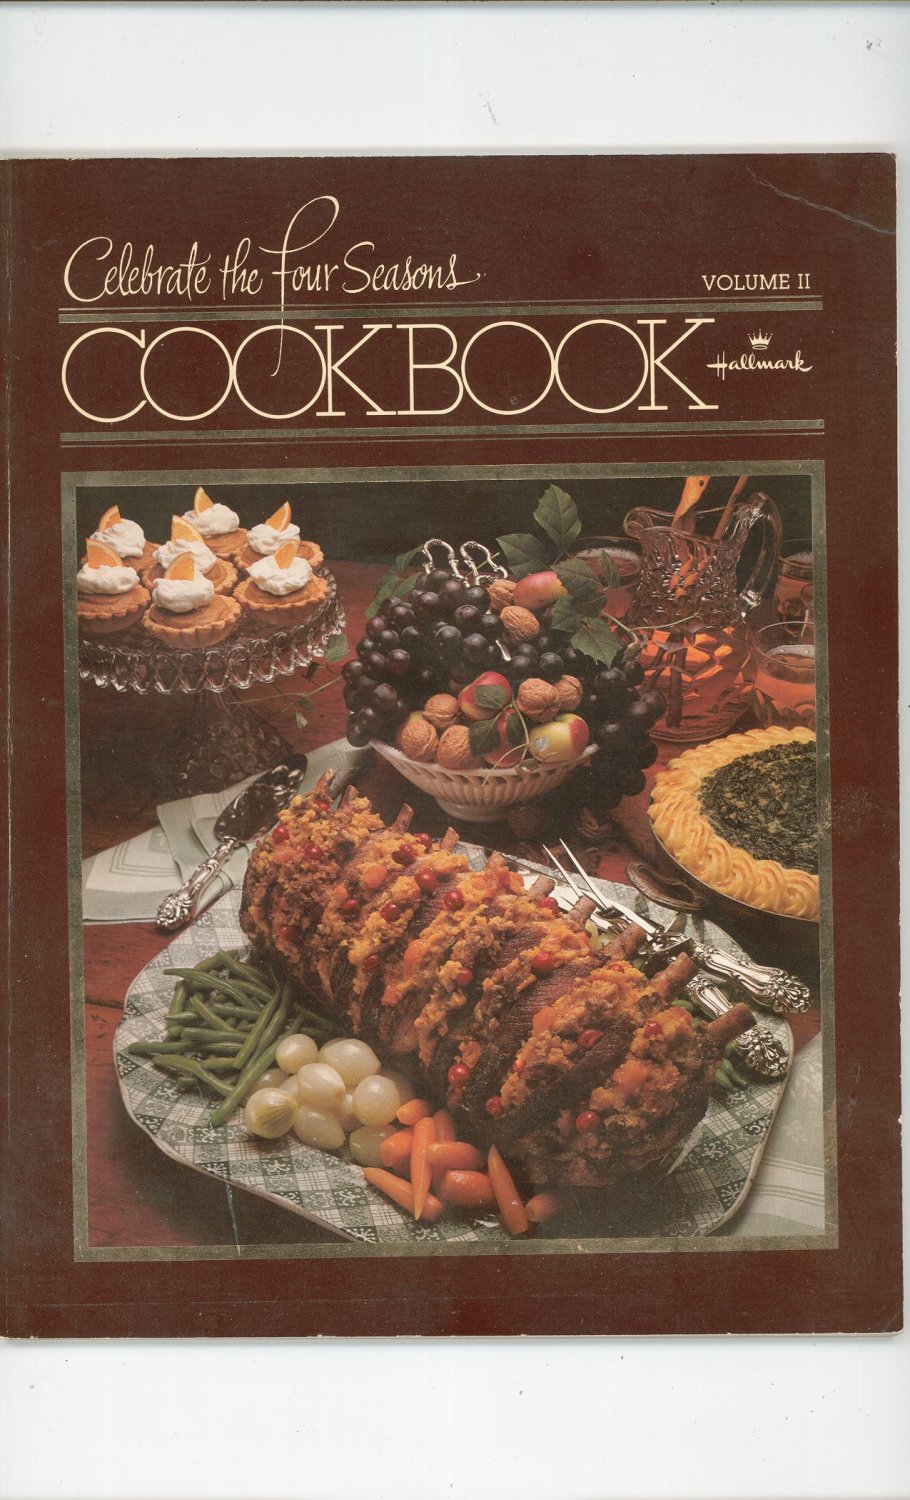 Celebrate The Four Seasons Cookbook Volume 2 by Hallmark